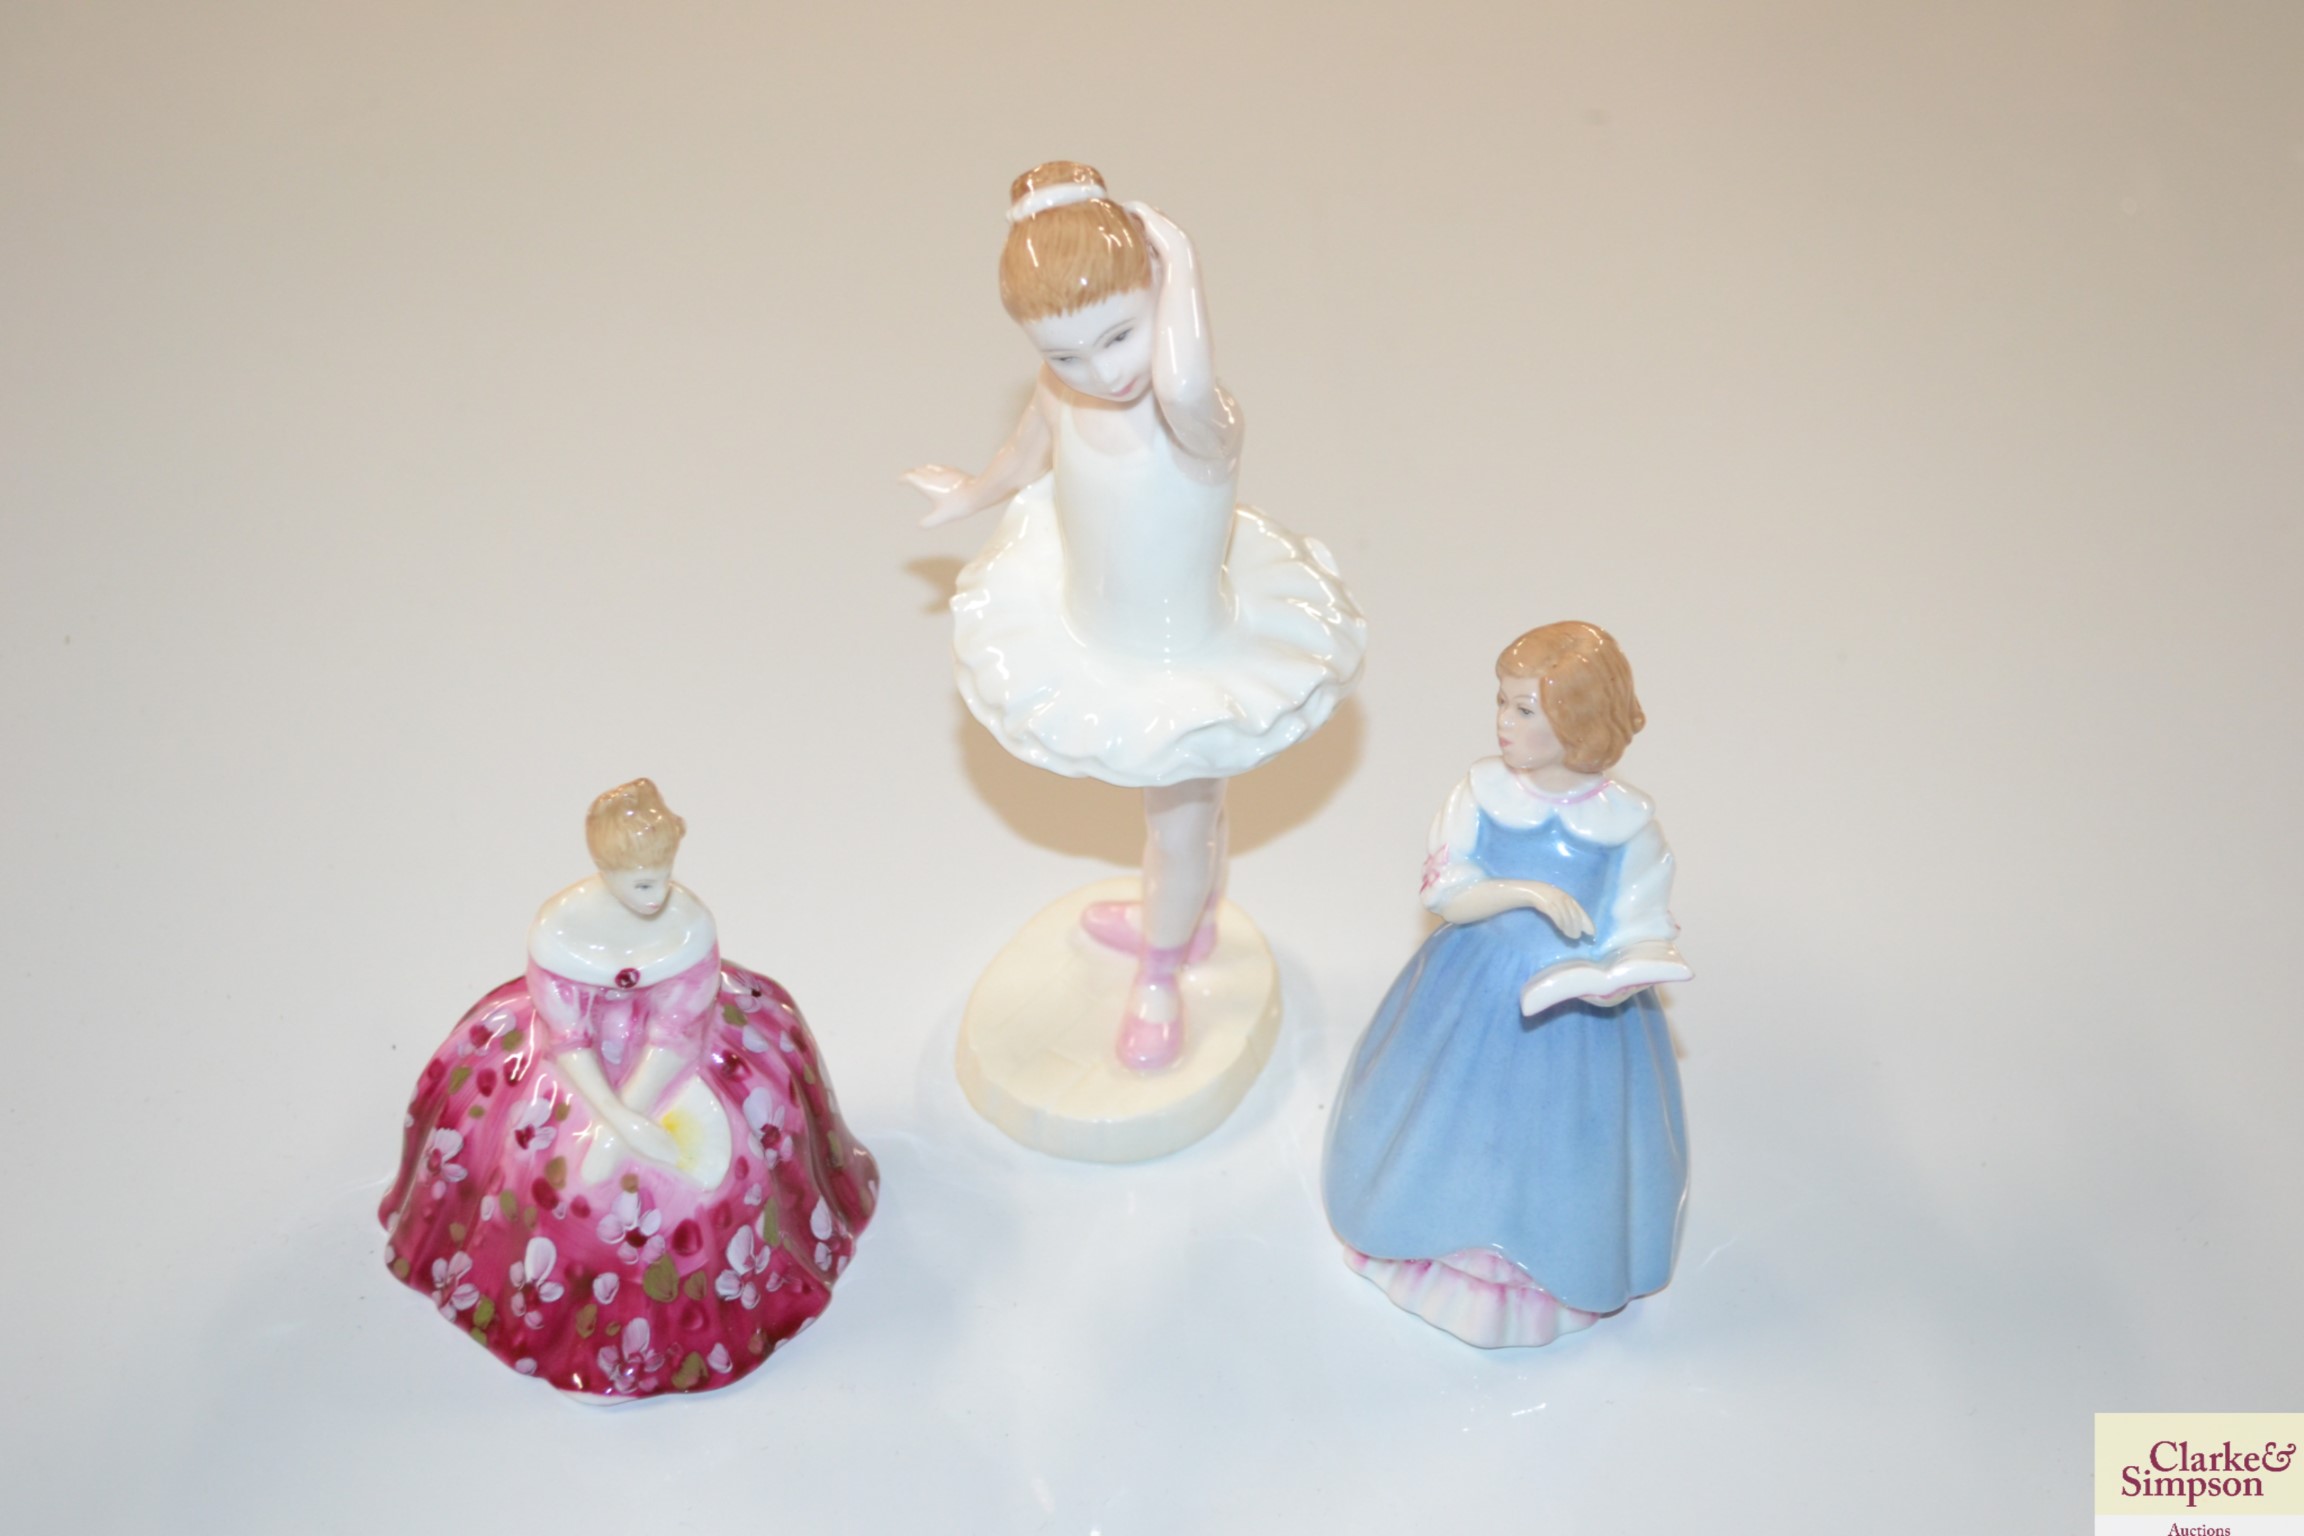 Three Royal Doulton figurines "Little Ballerina, V